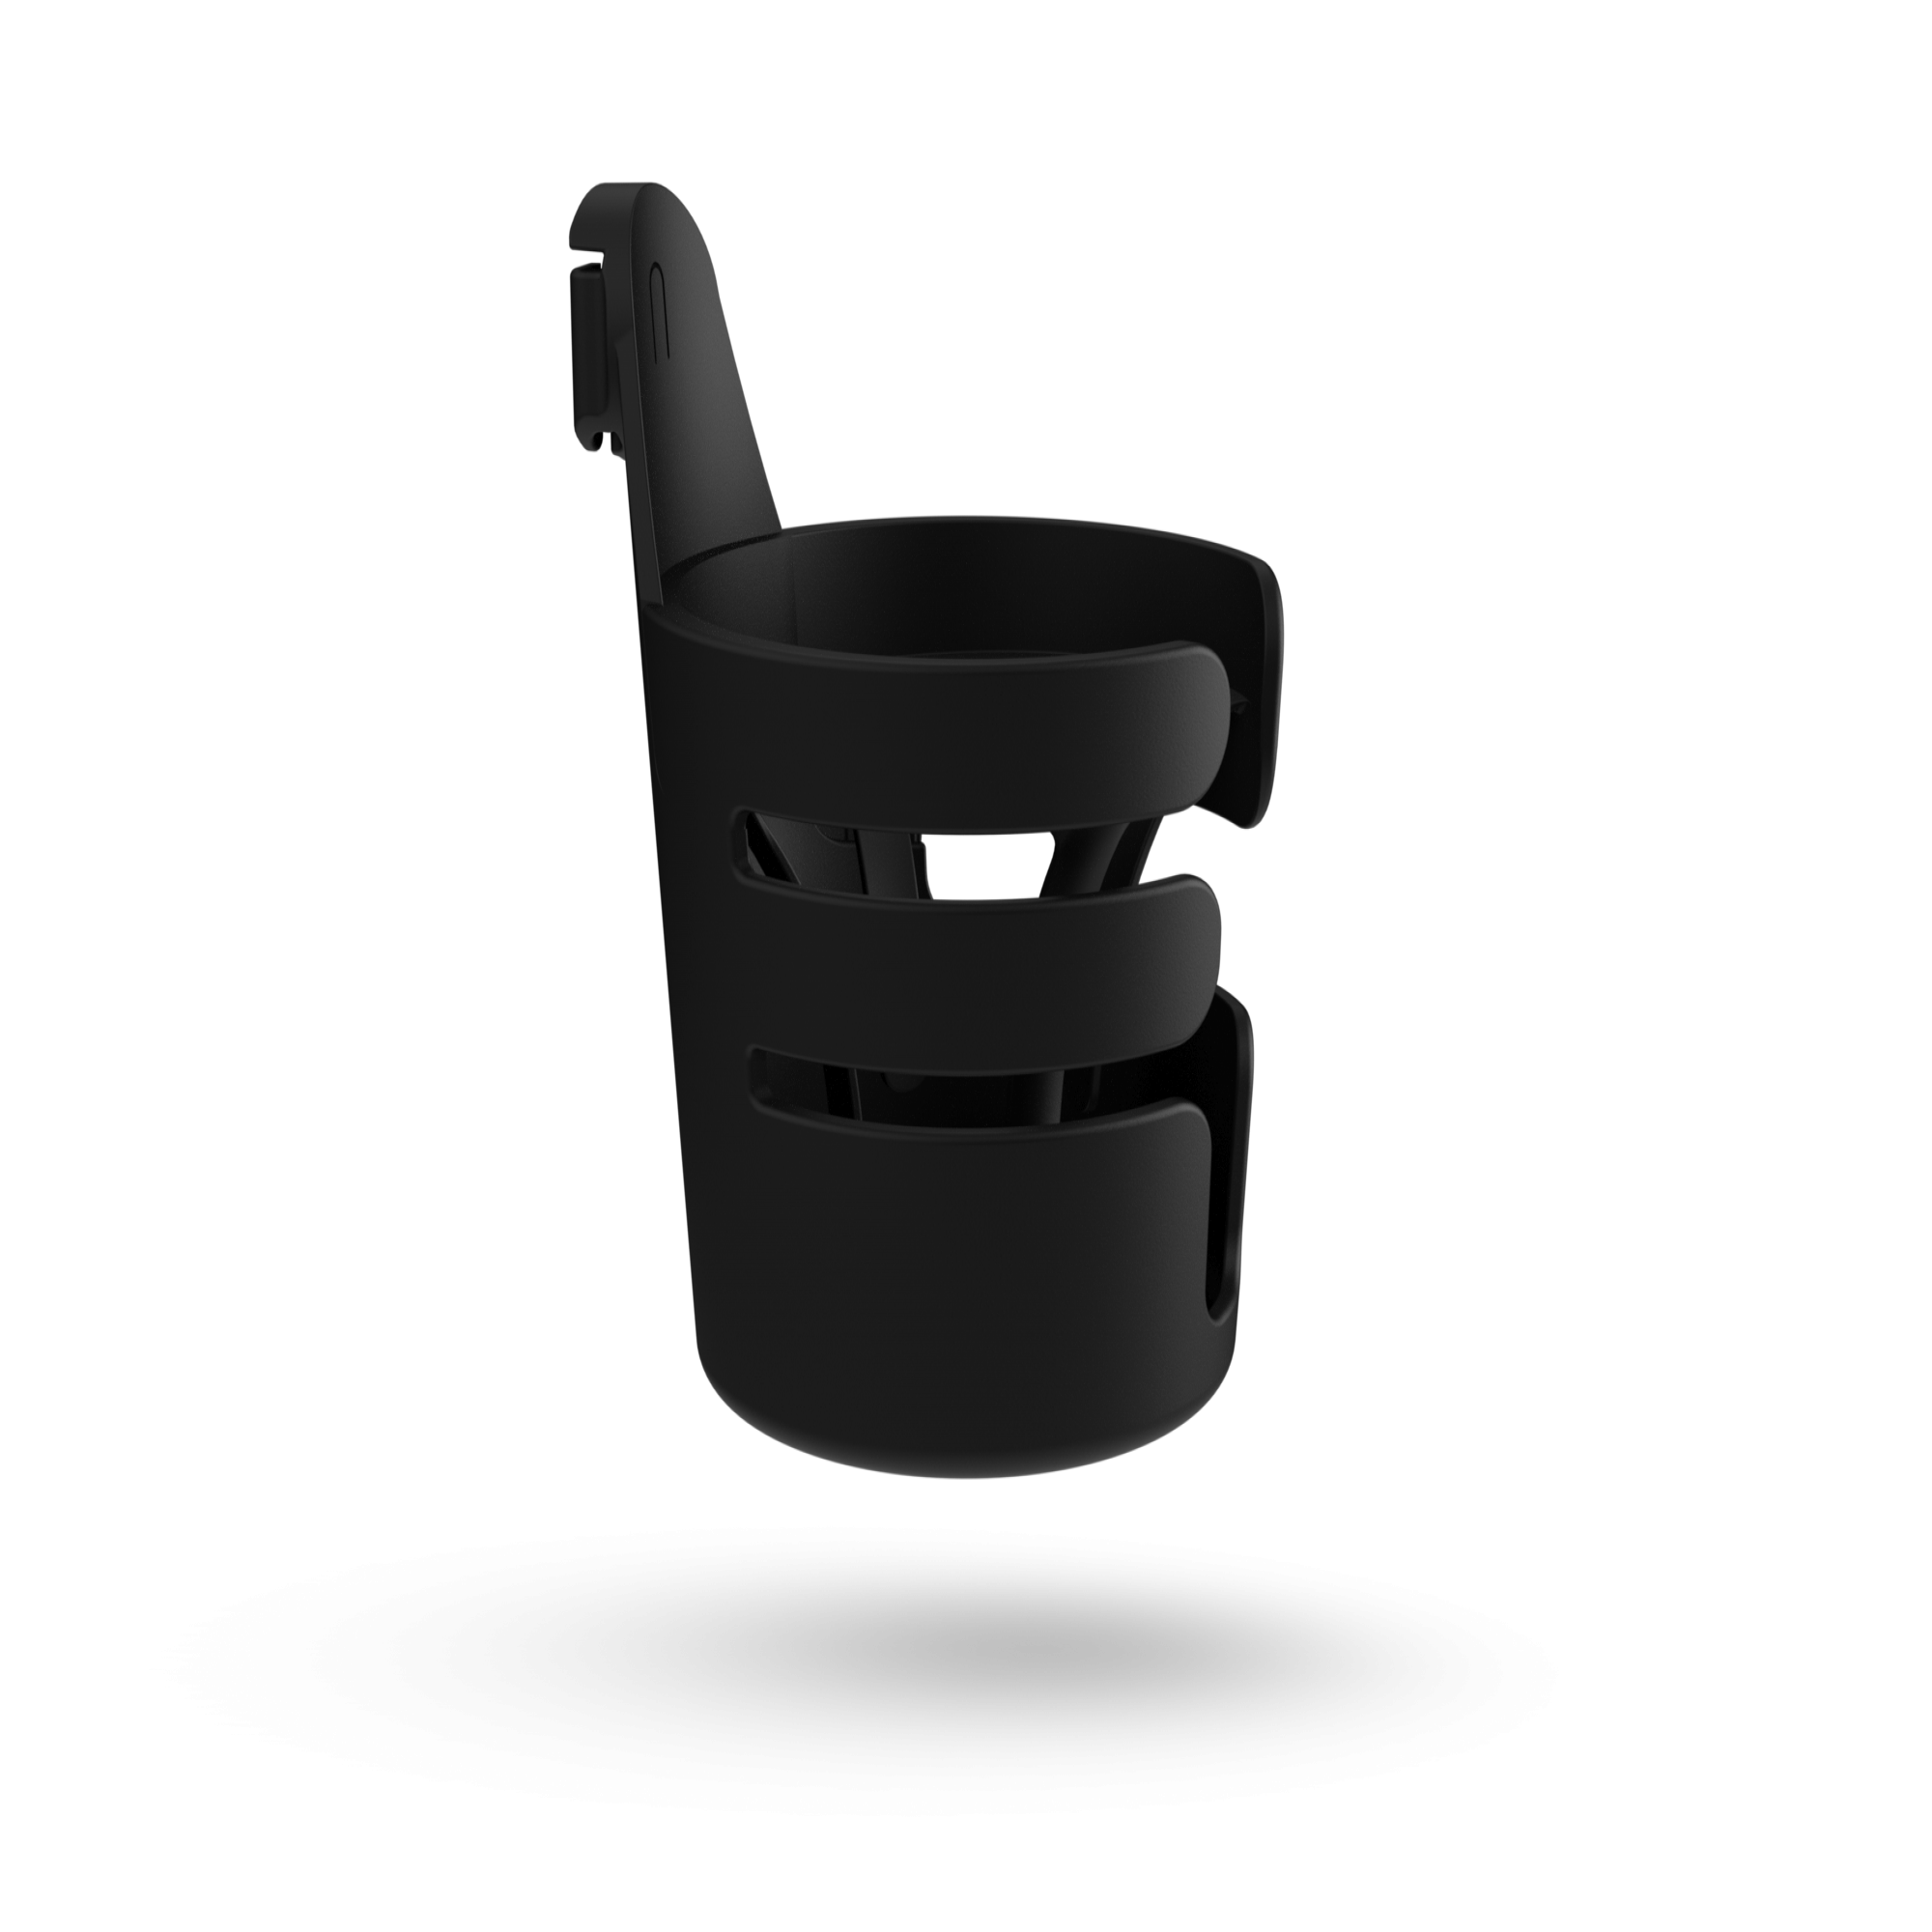 Bugaboo cup holder Black